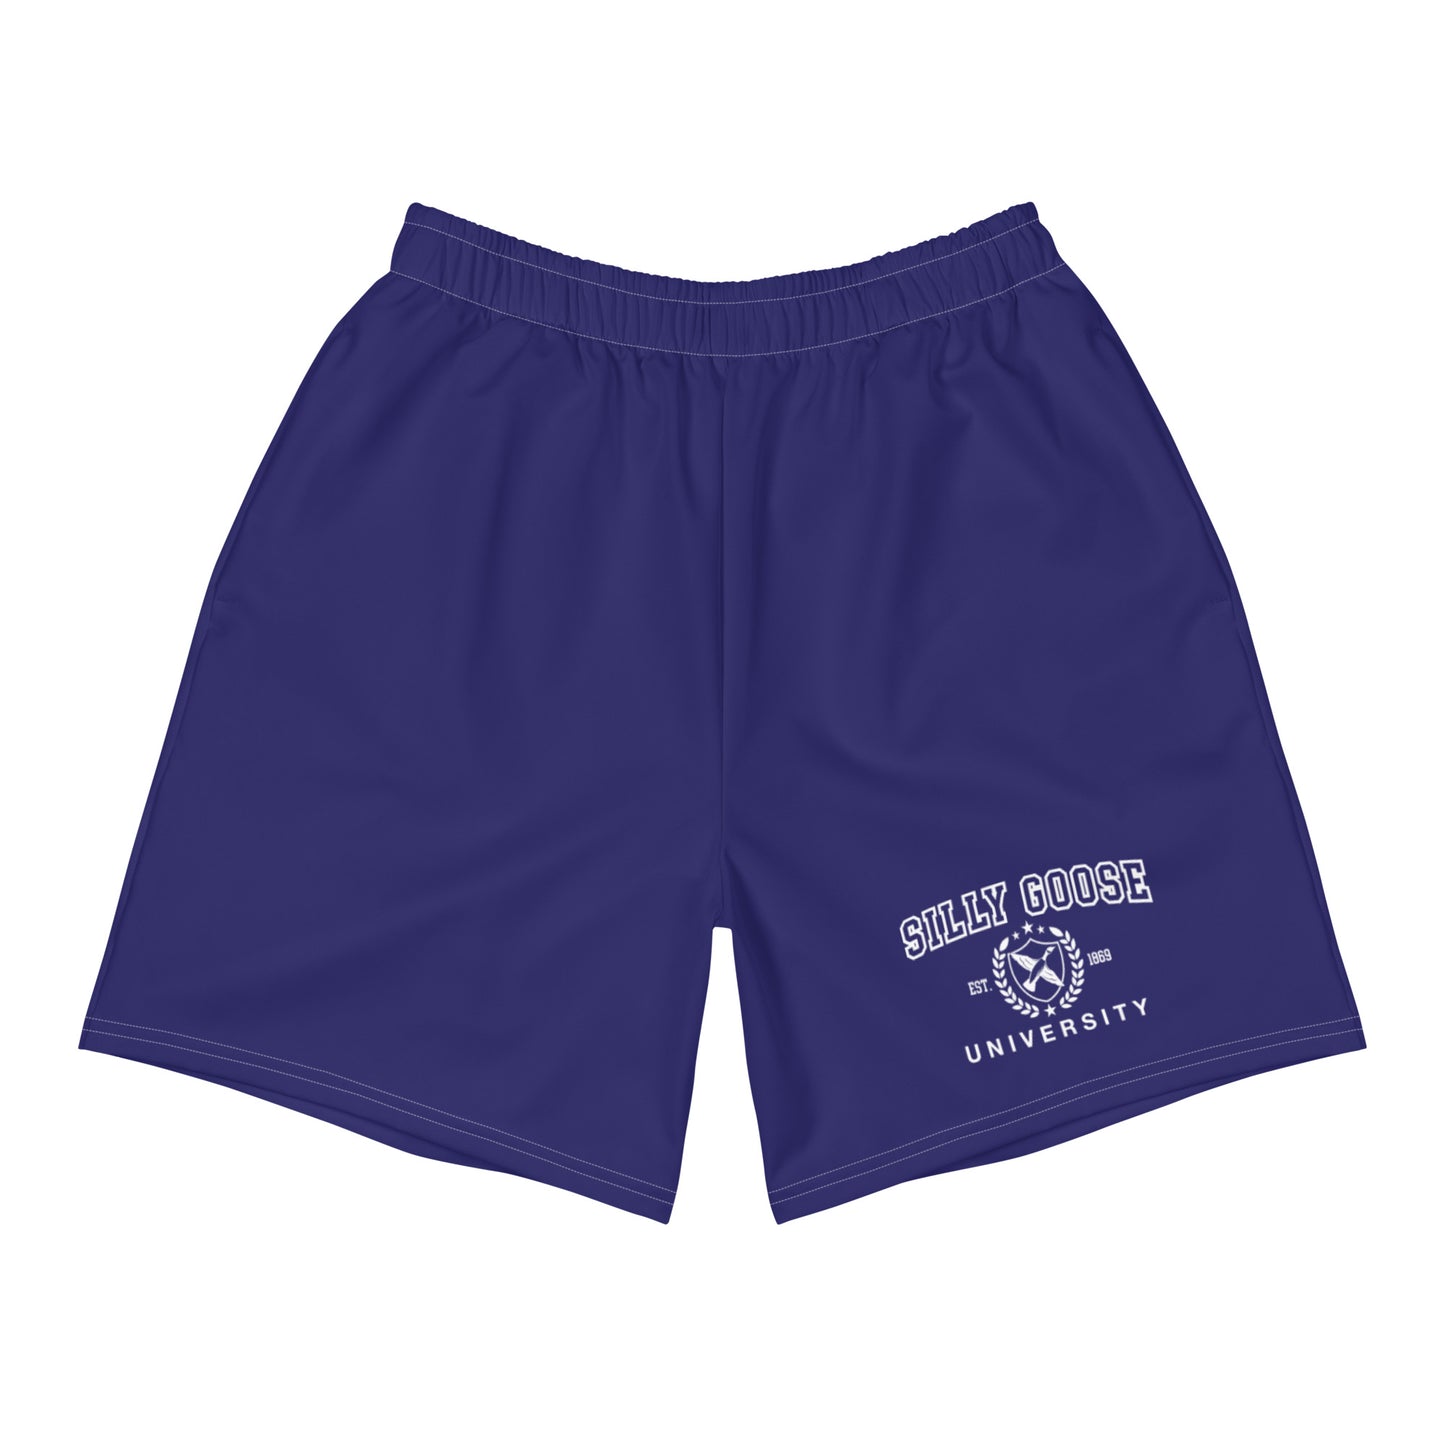 Silly Goose University Athletic Shorts (Long)